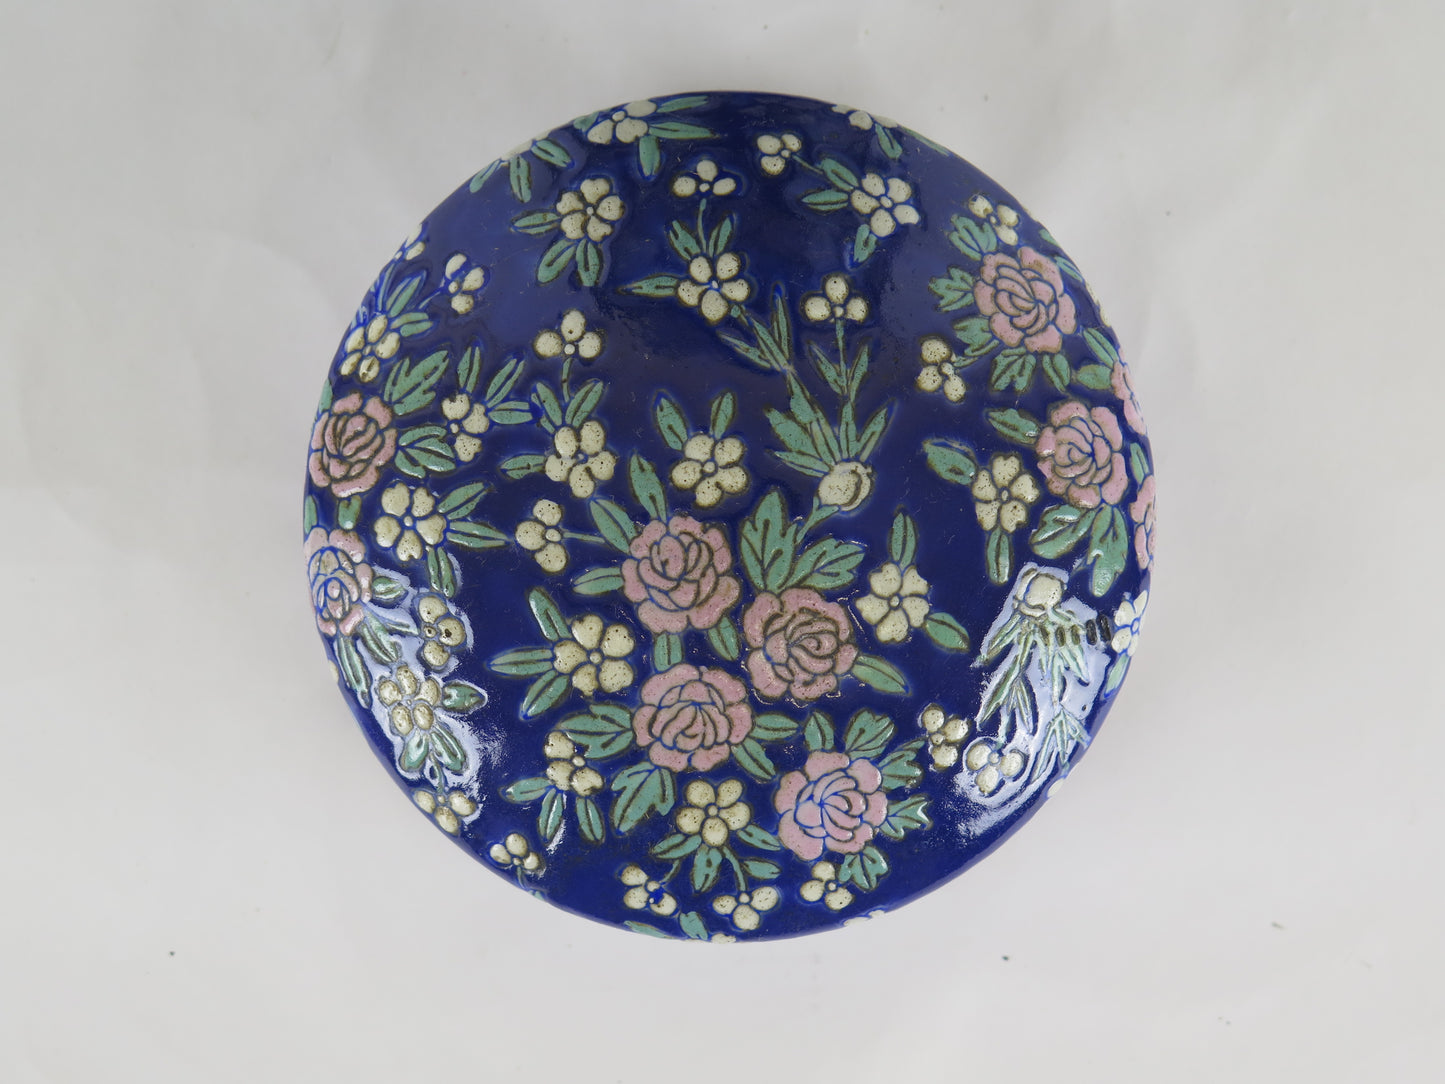 Large hand-painted vintage glazed ceramic vase with blue floral motifs, China Asia, 1900s CM5